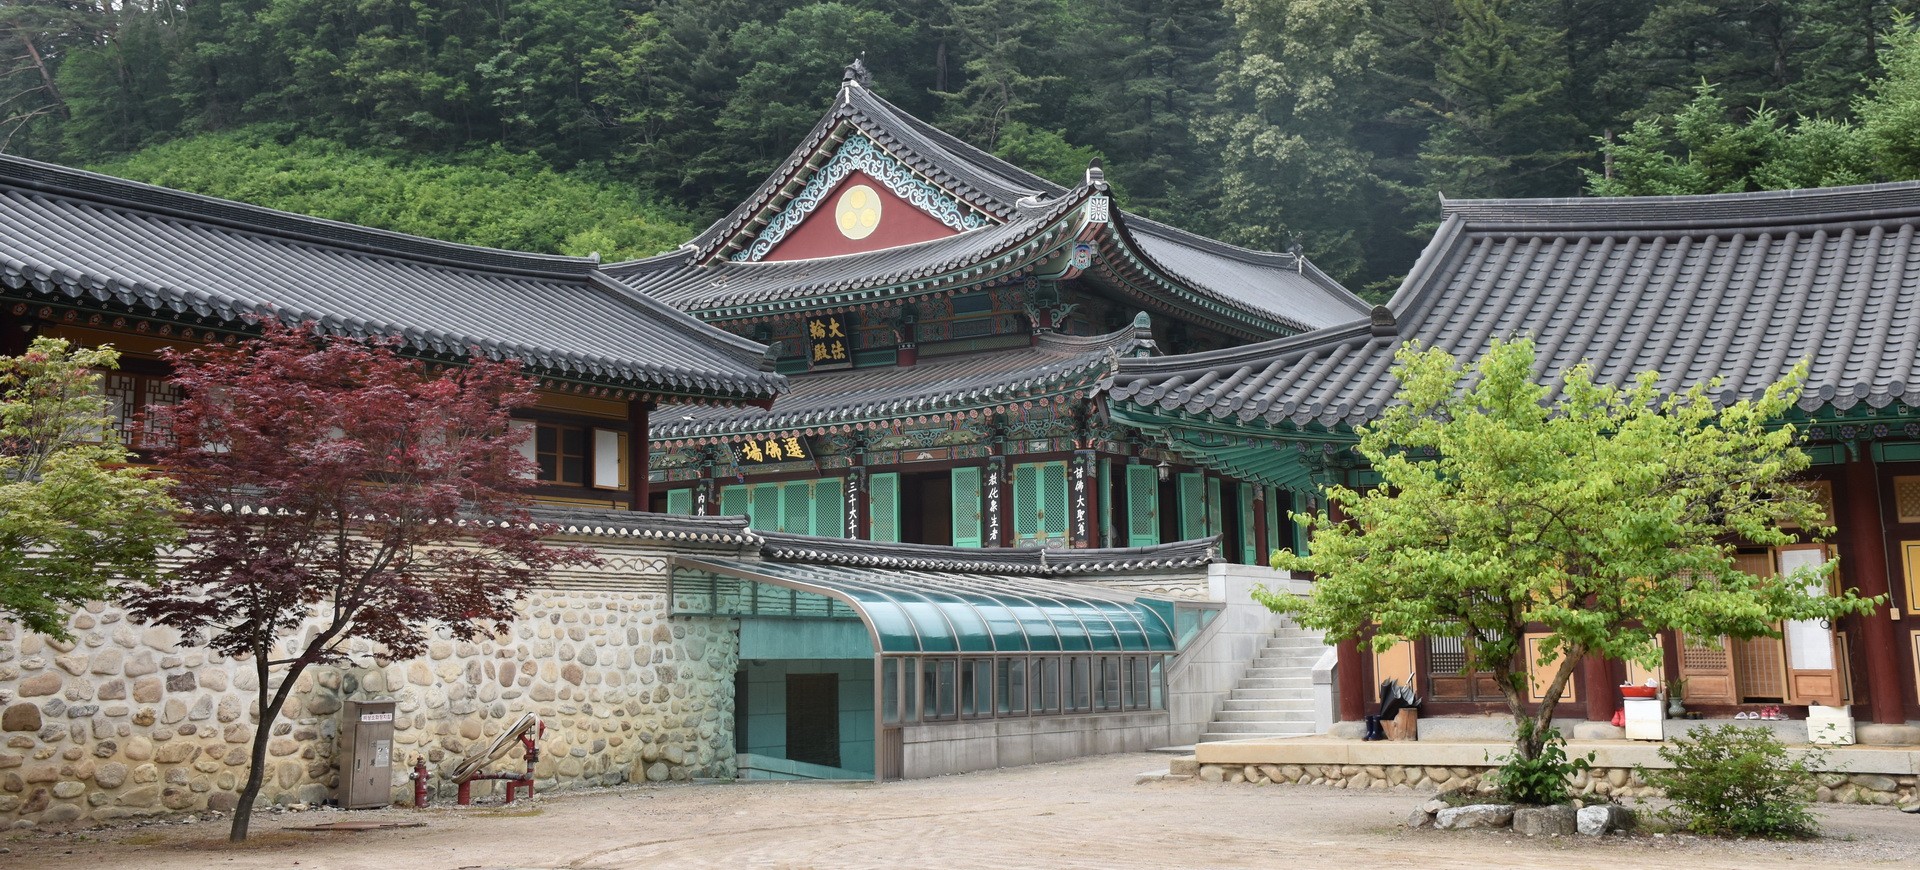 Corée du Sud Pyeongchang Temple Wolijeongsa